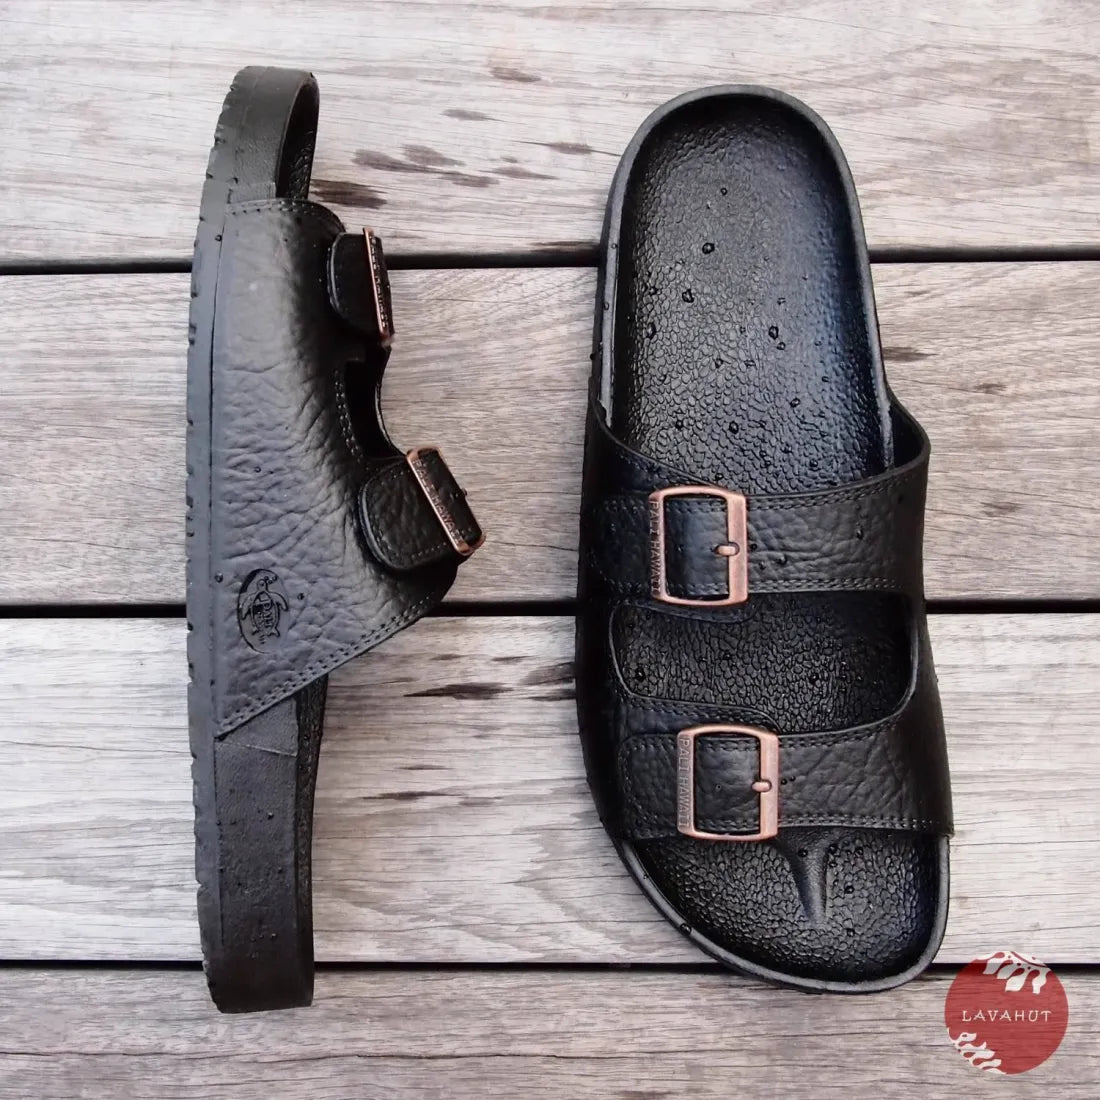 Black Buckle™ - Pali Hawaii Sandals Made